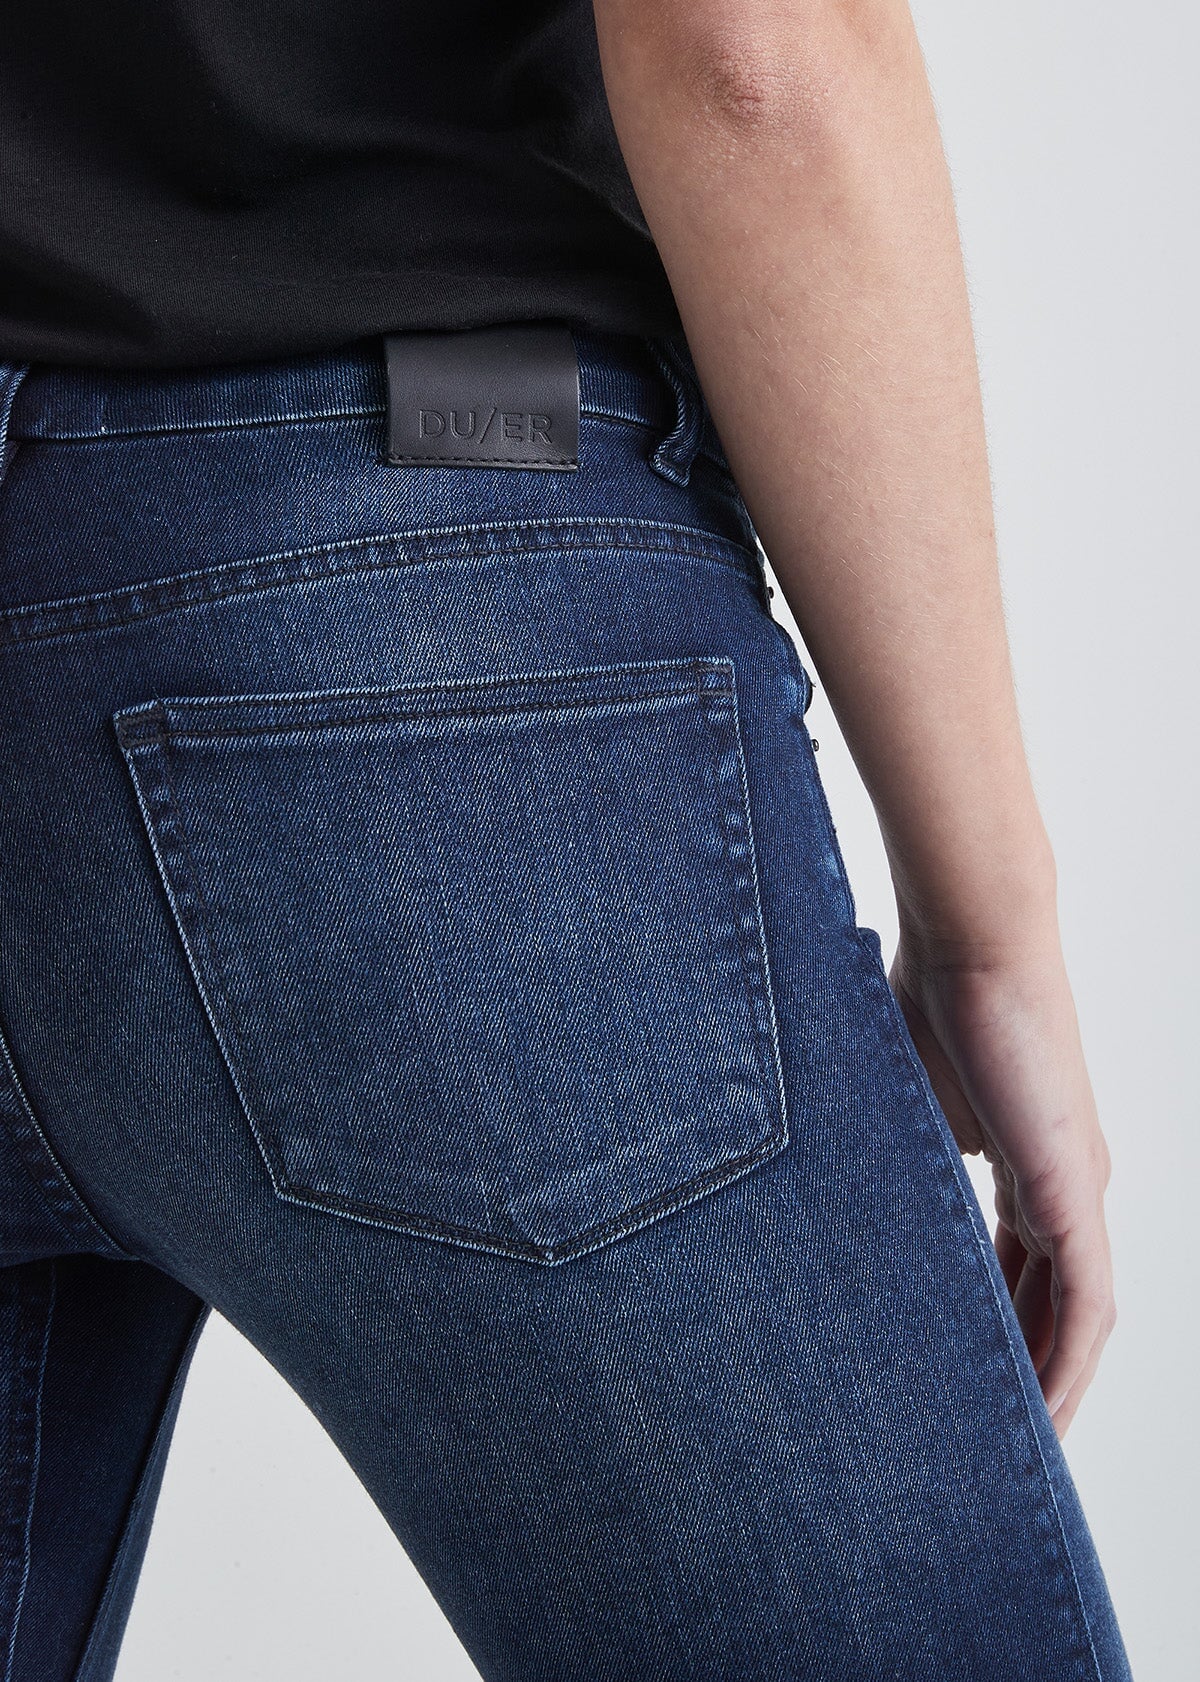 Women's 9 Mid-Rise Skinny Jeans